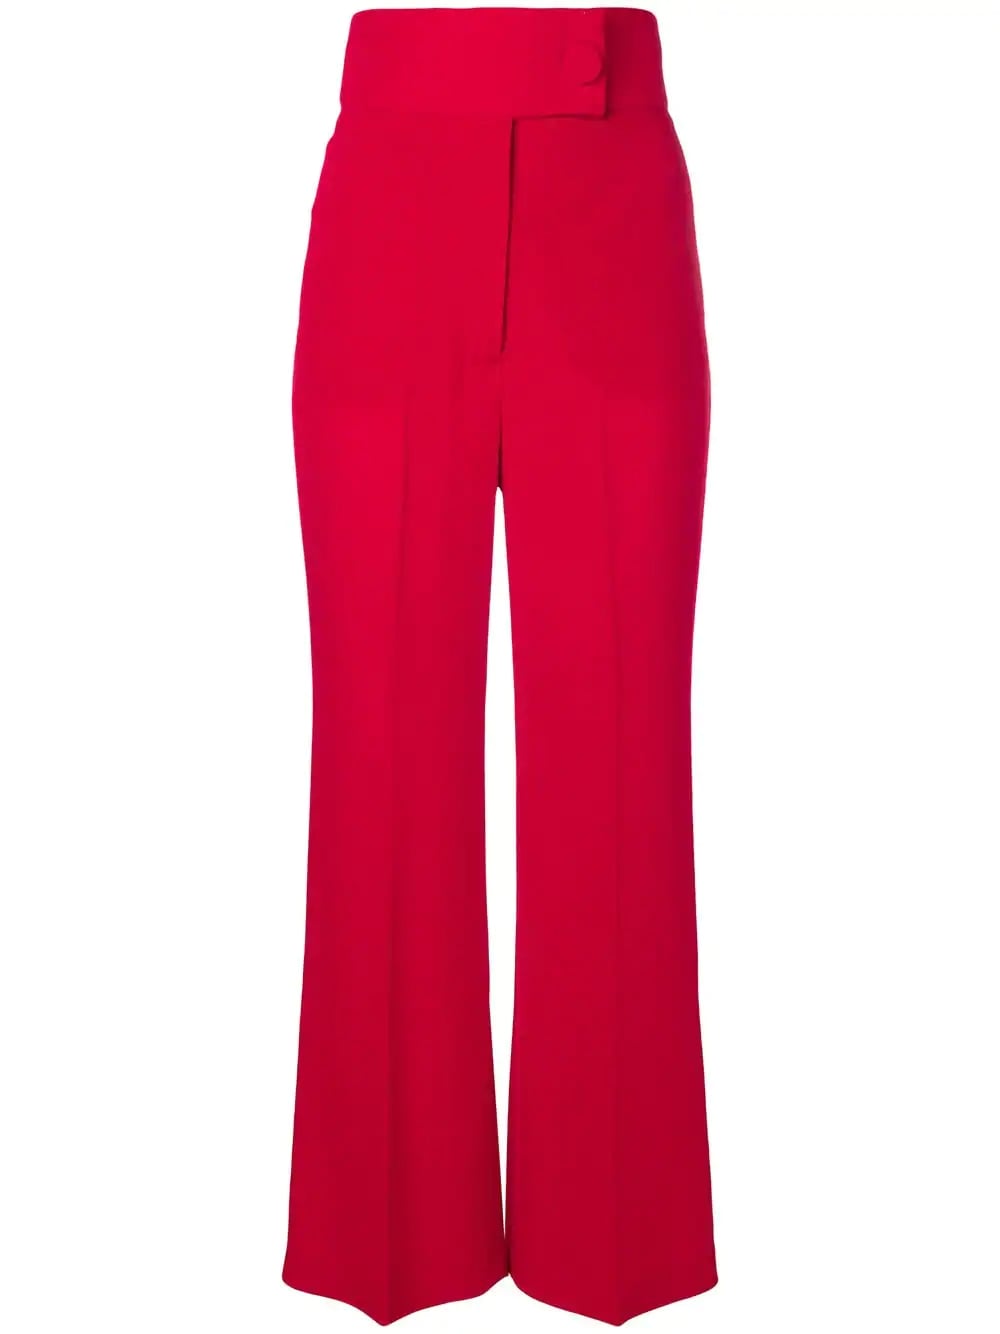 Victoria Beckham's Red Pants November 2018